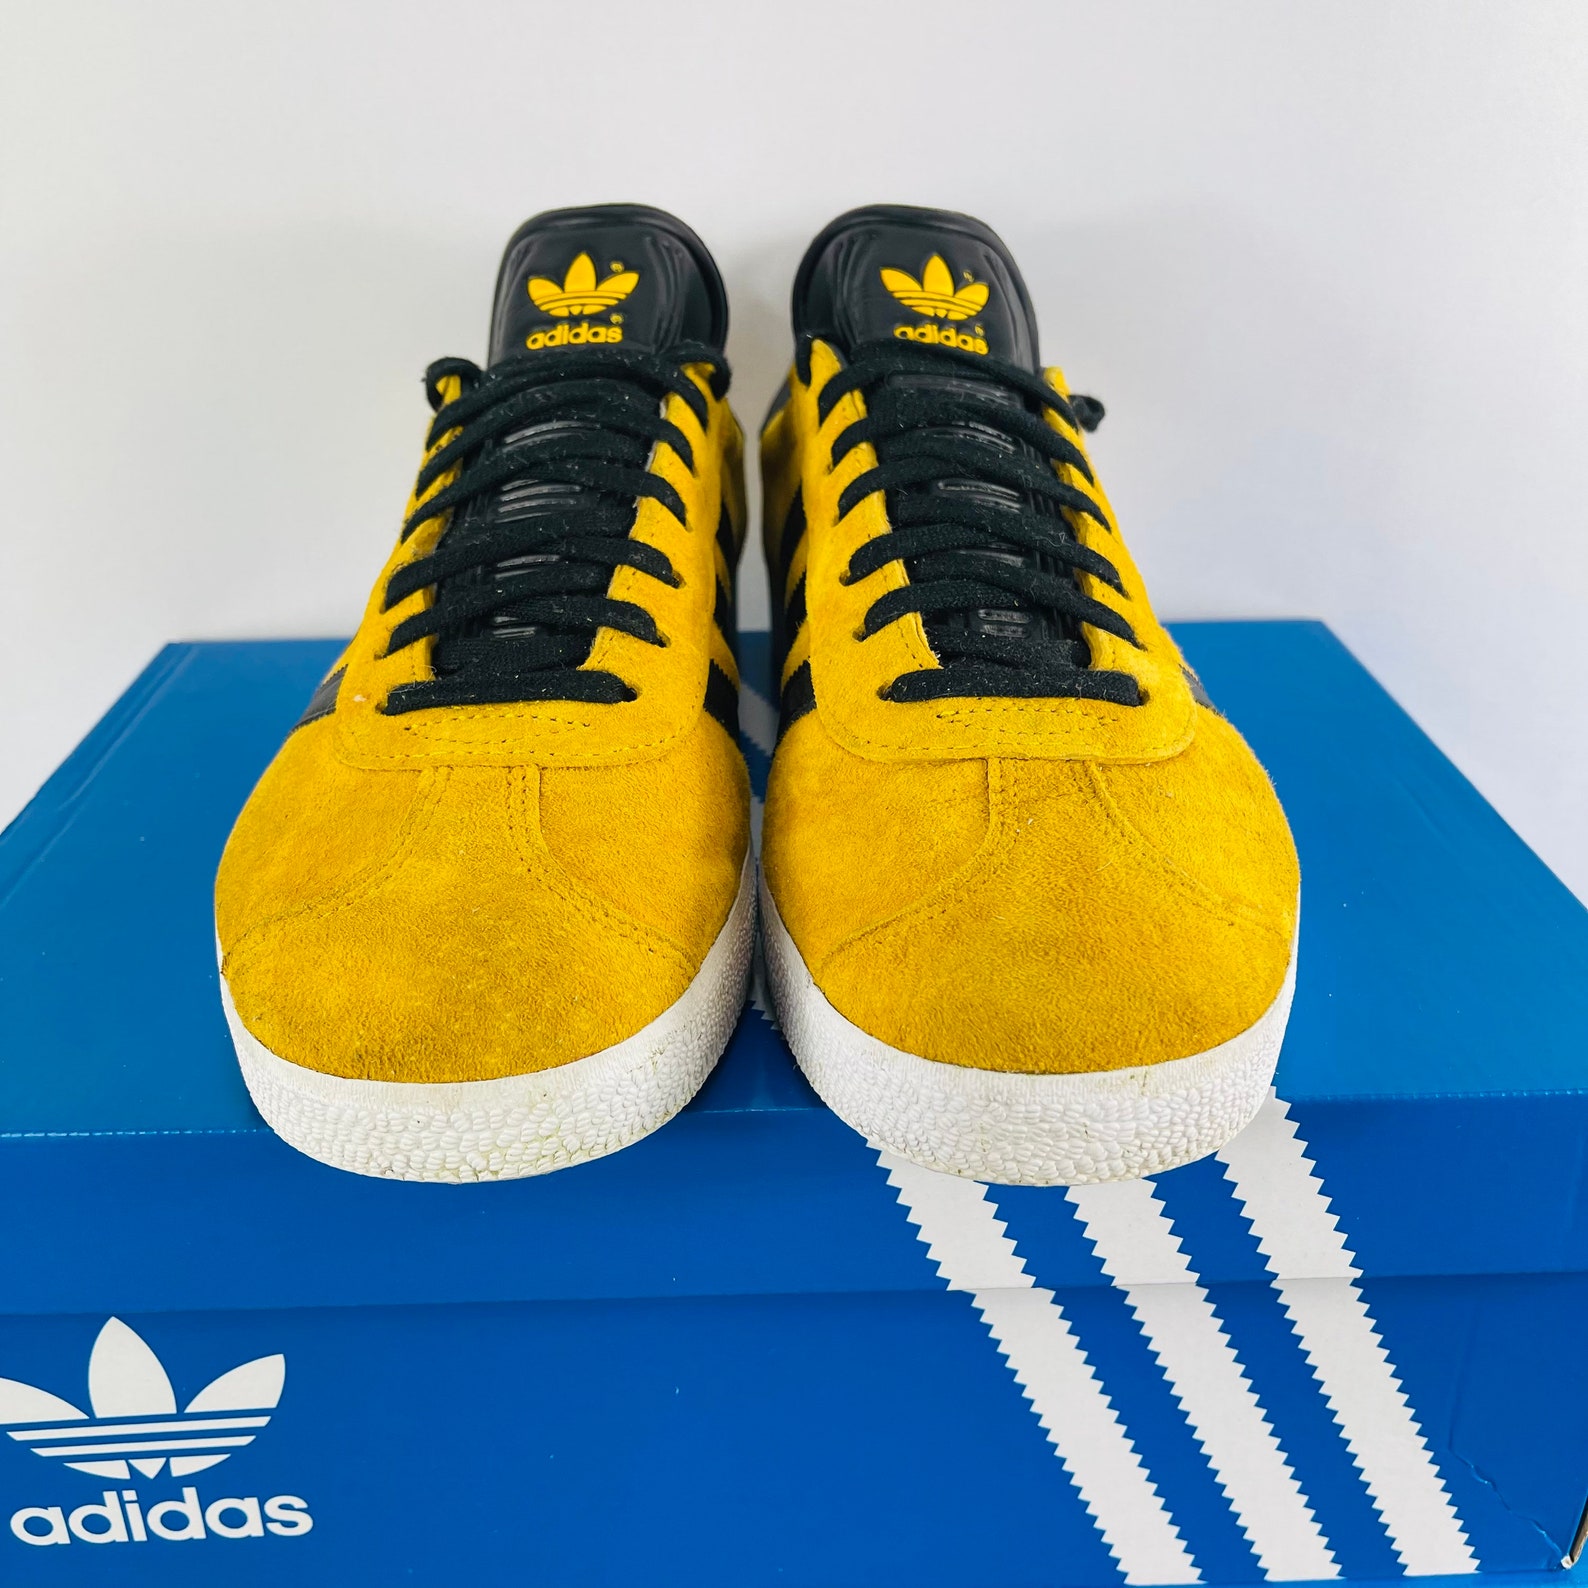 Rare Unisex Adidas Gazelle 2016 Yellow And Black Trainers | Etsy